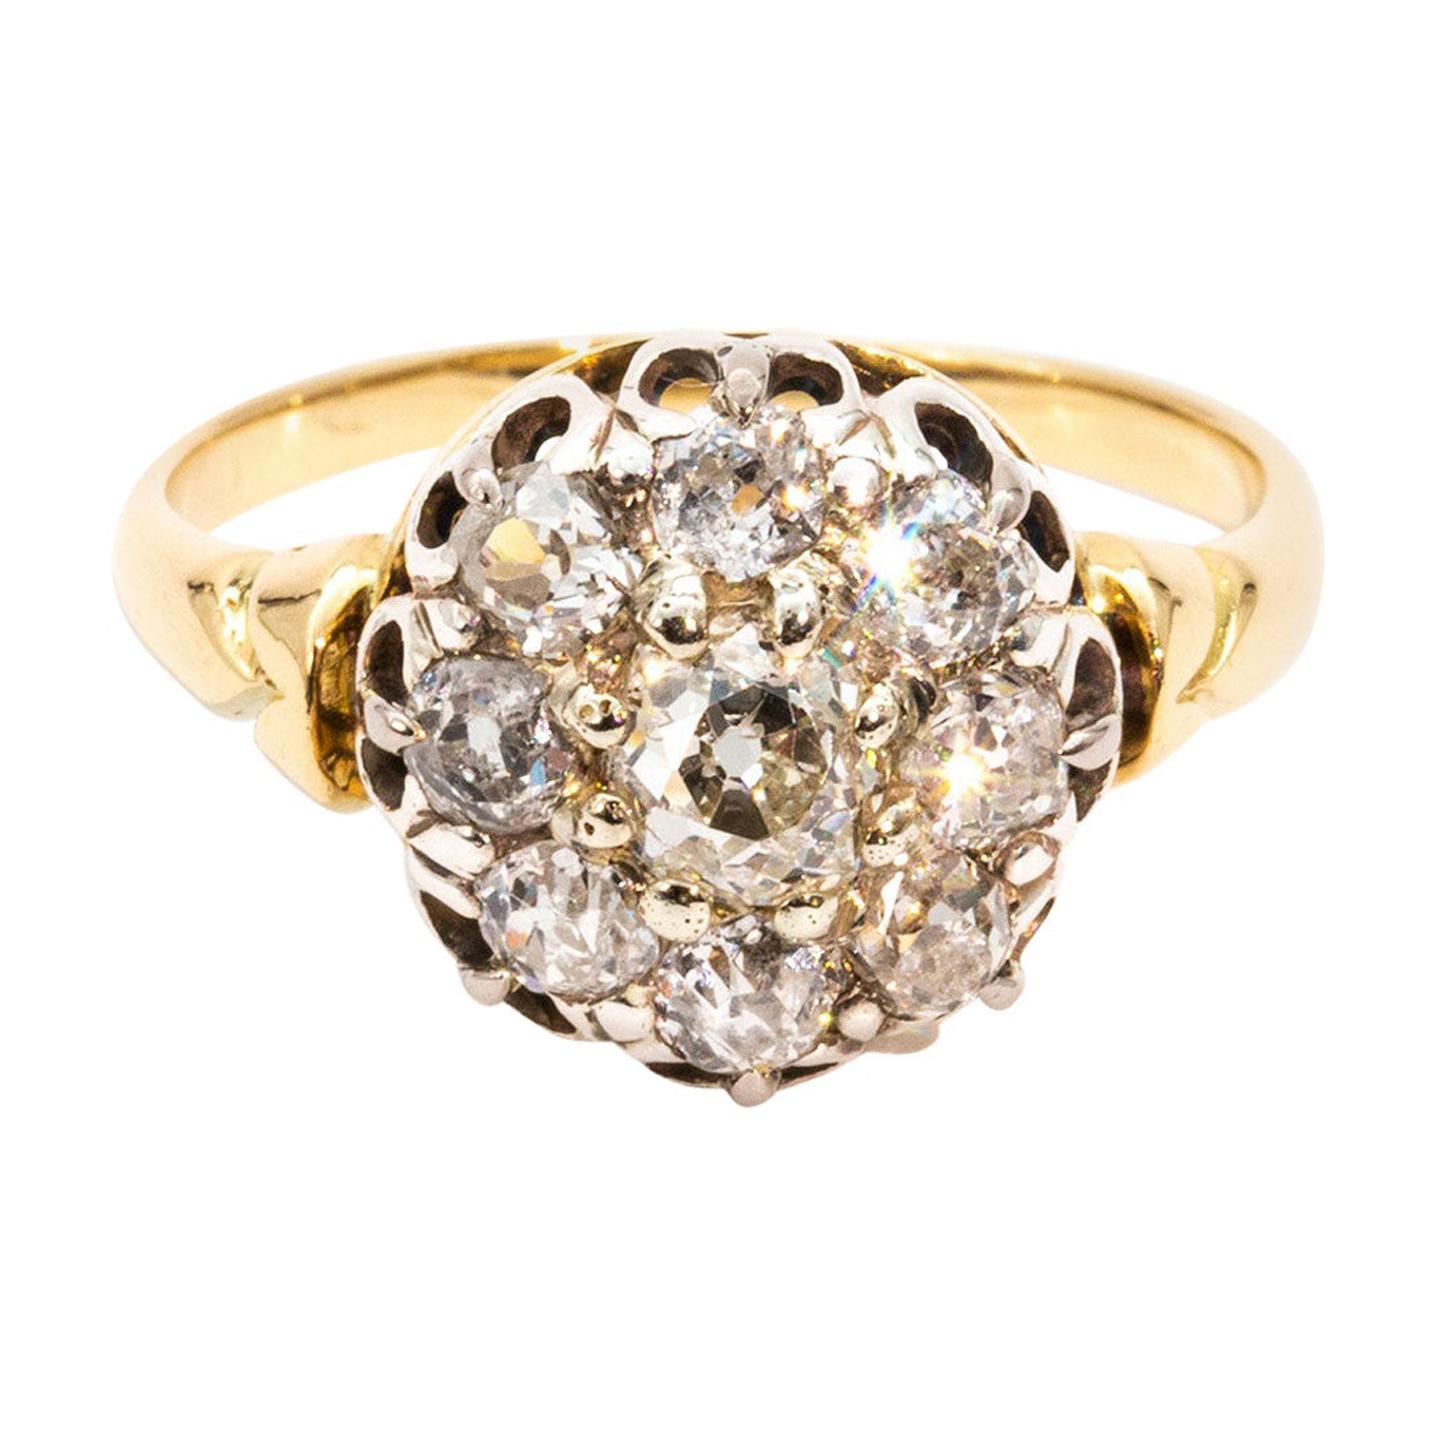 1.46 Carat Old Cut Diamond 18 Carat Gold Cluster Ring, Circa 1890s